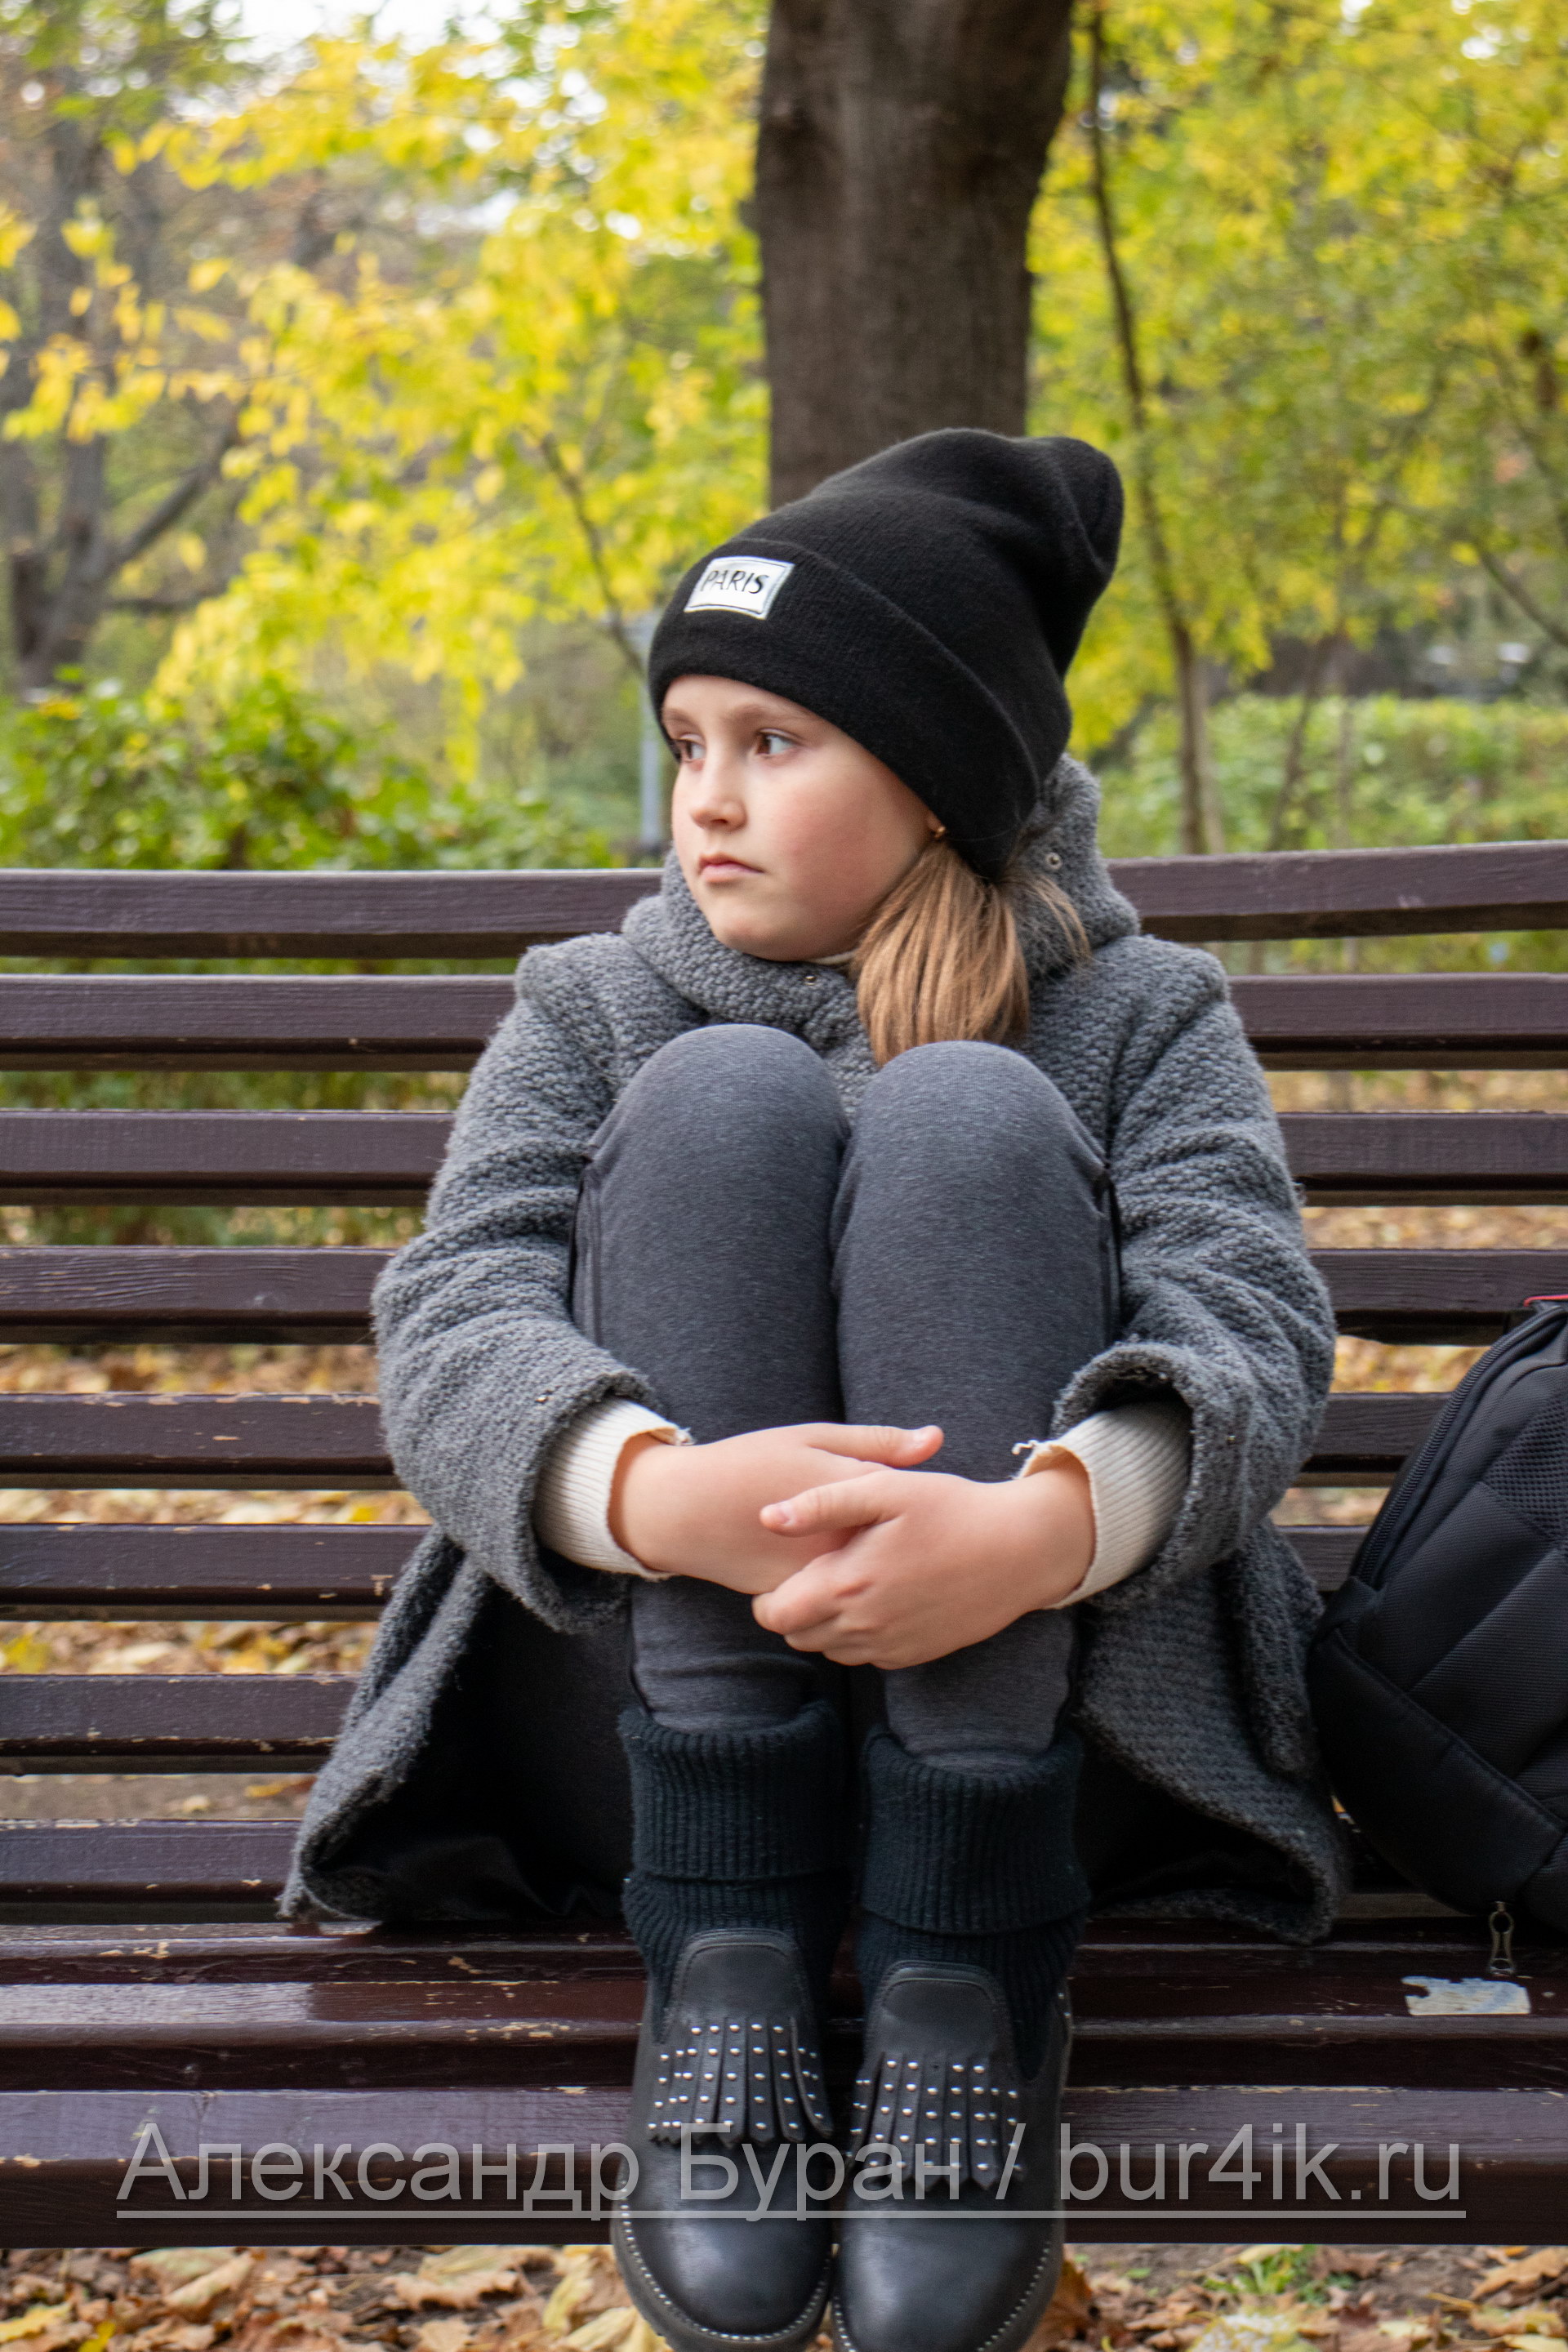 Девушка в парке залезла на скамейку с ногами - Украина, Одесса, 17,10,2019